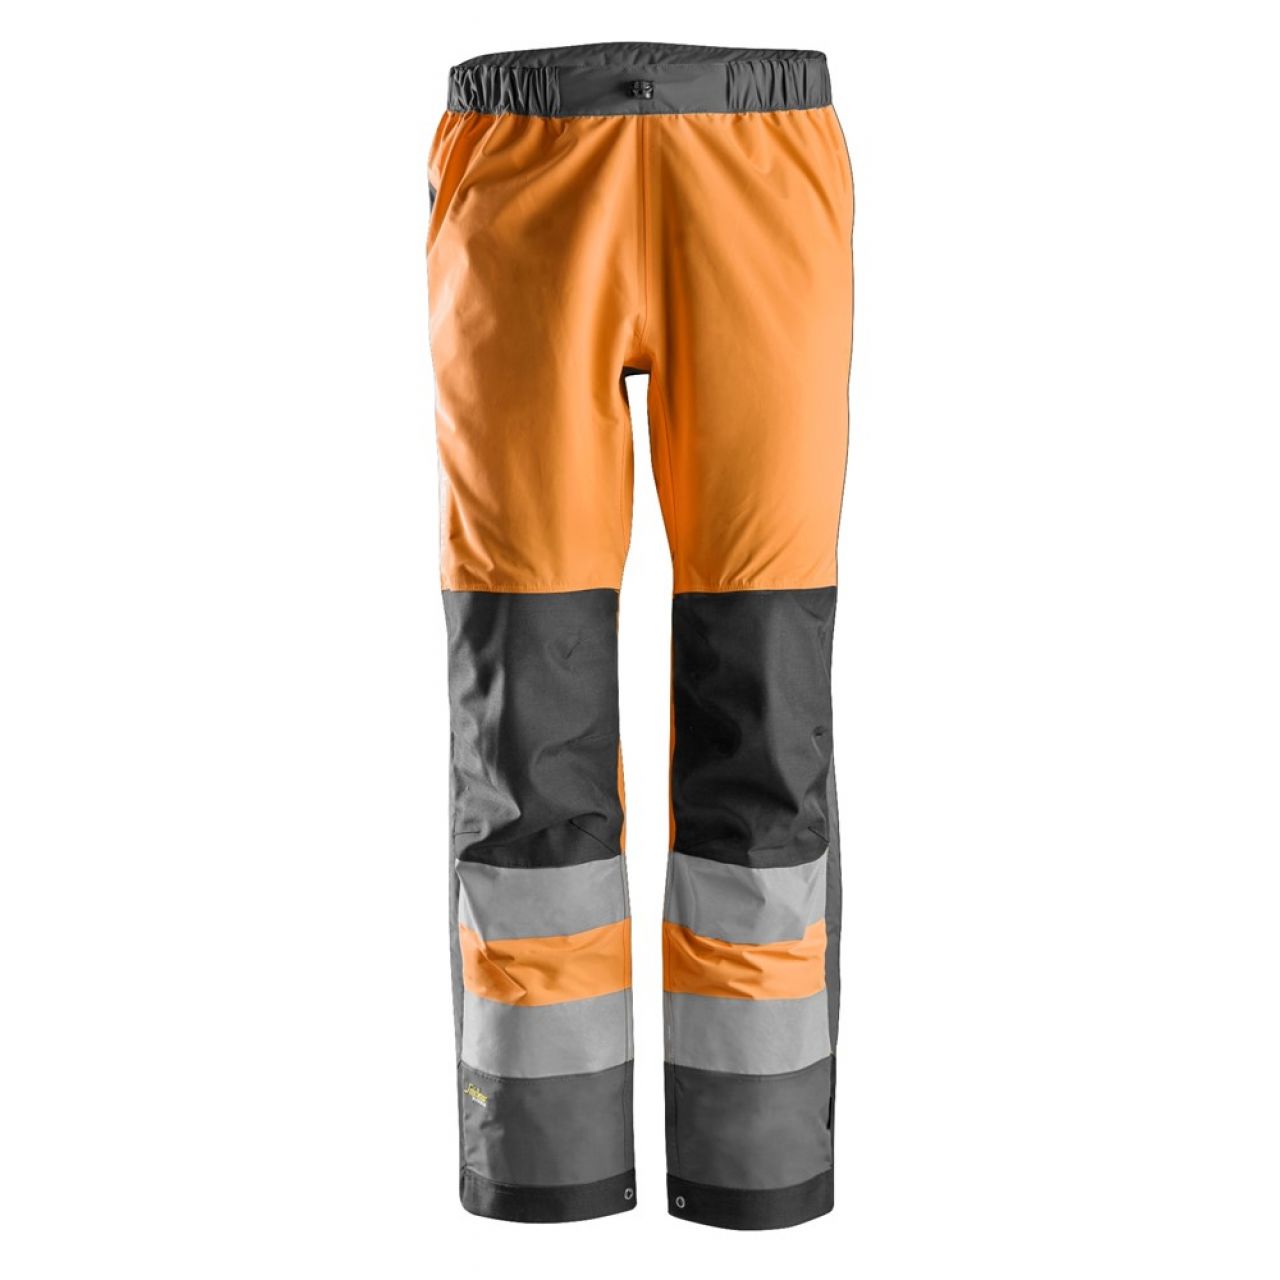 6530 Pantalones largos de trabajo impermeables Waterproof Shell de alta visibilidad clase 2 AllroundWork naranja-gris acero talla XL